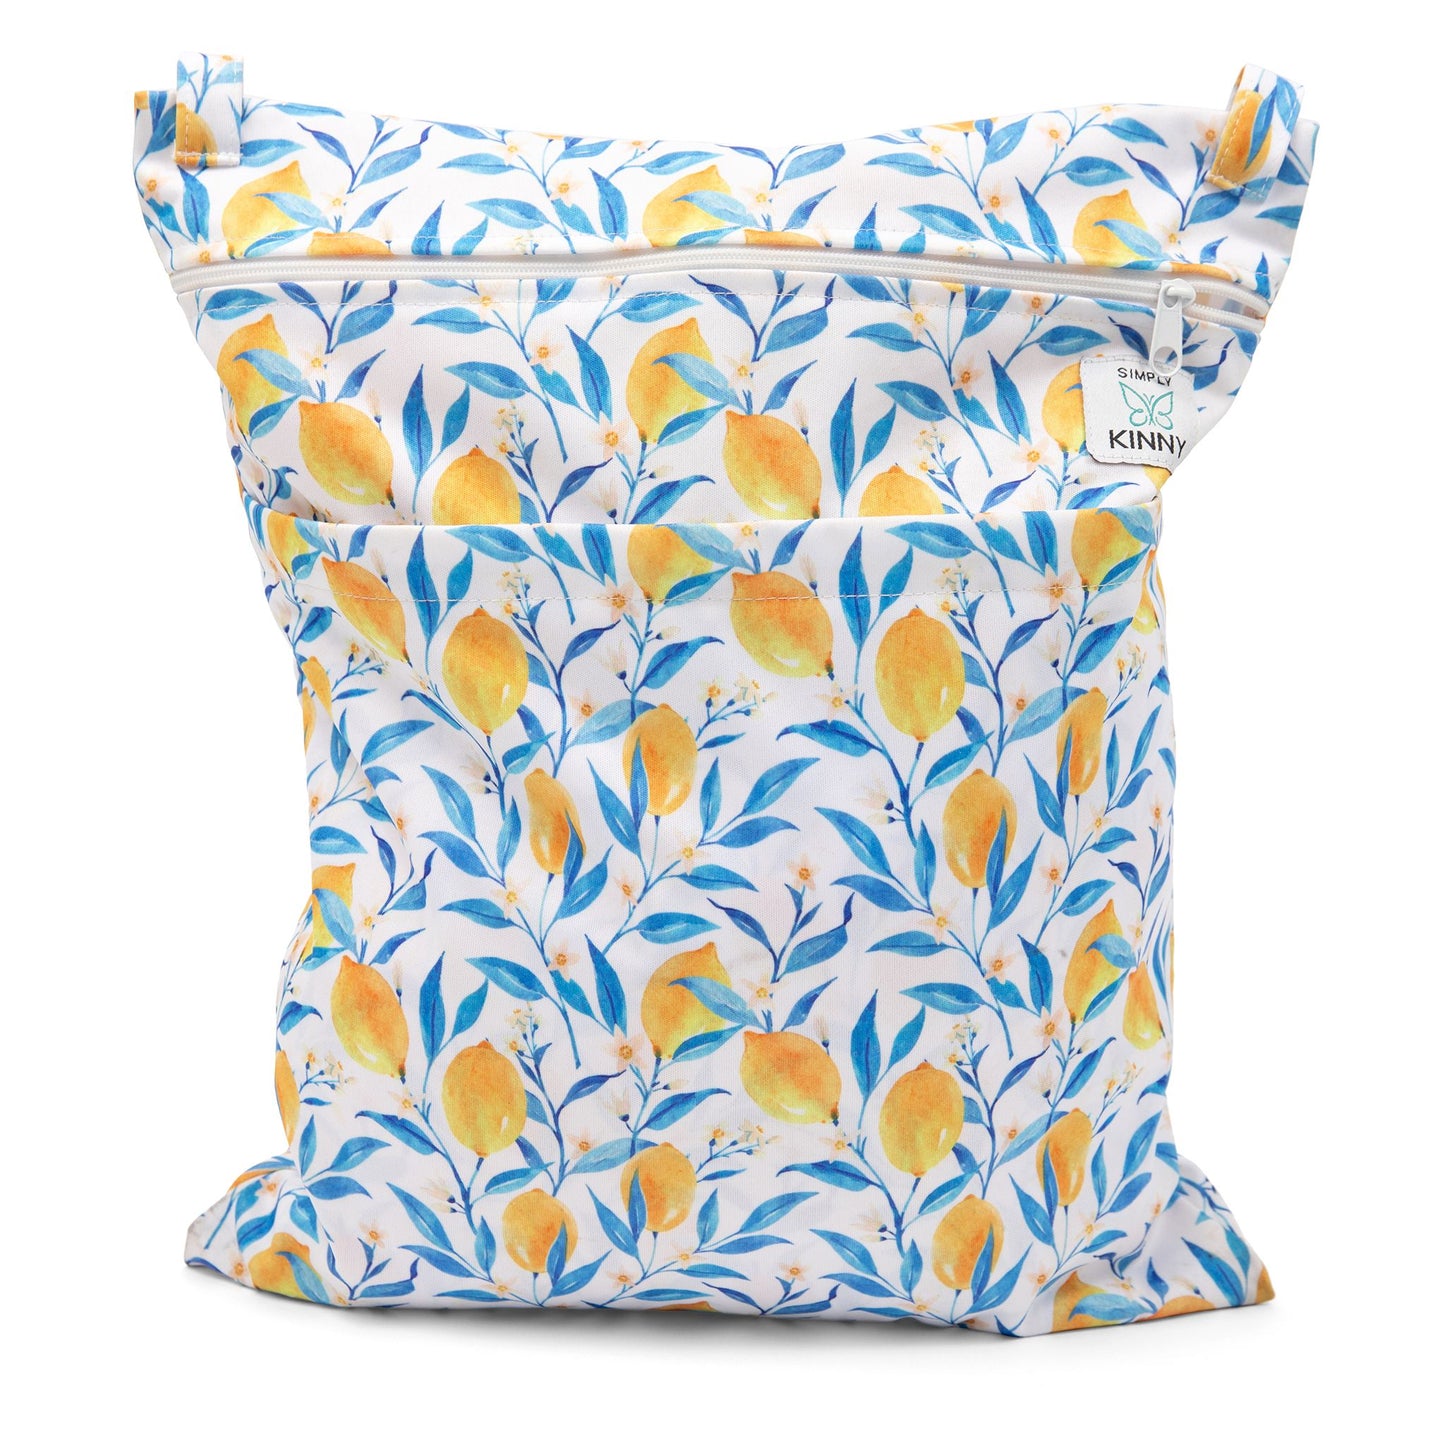 Lemon/Floral Print Wet Bag